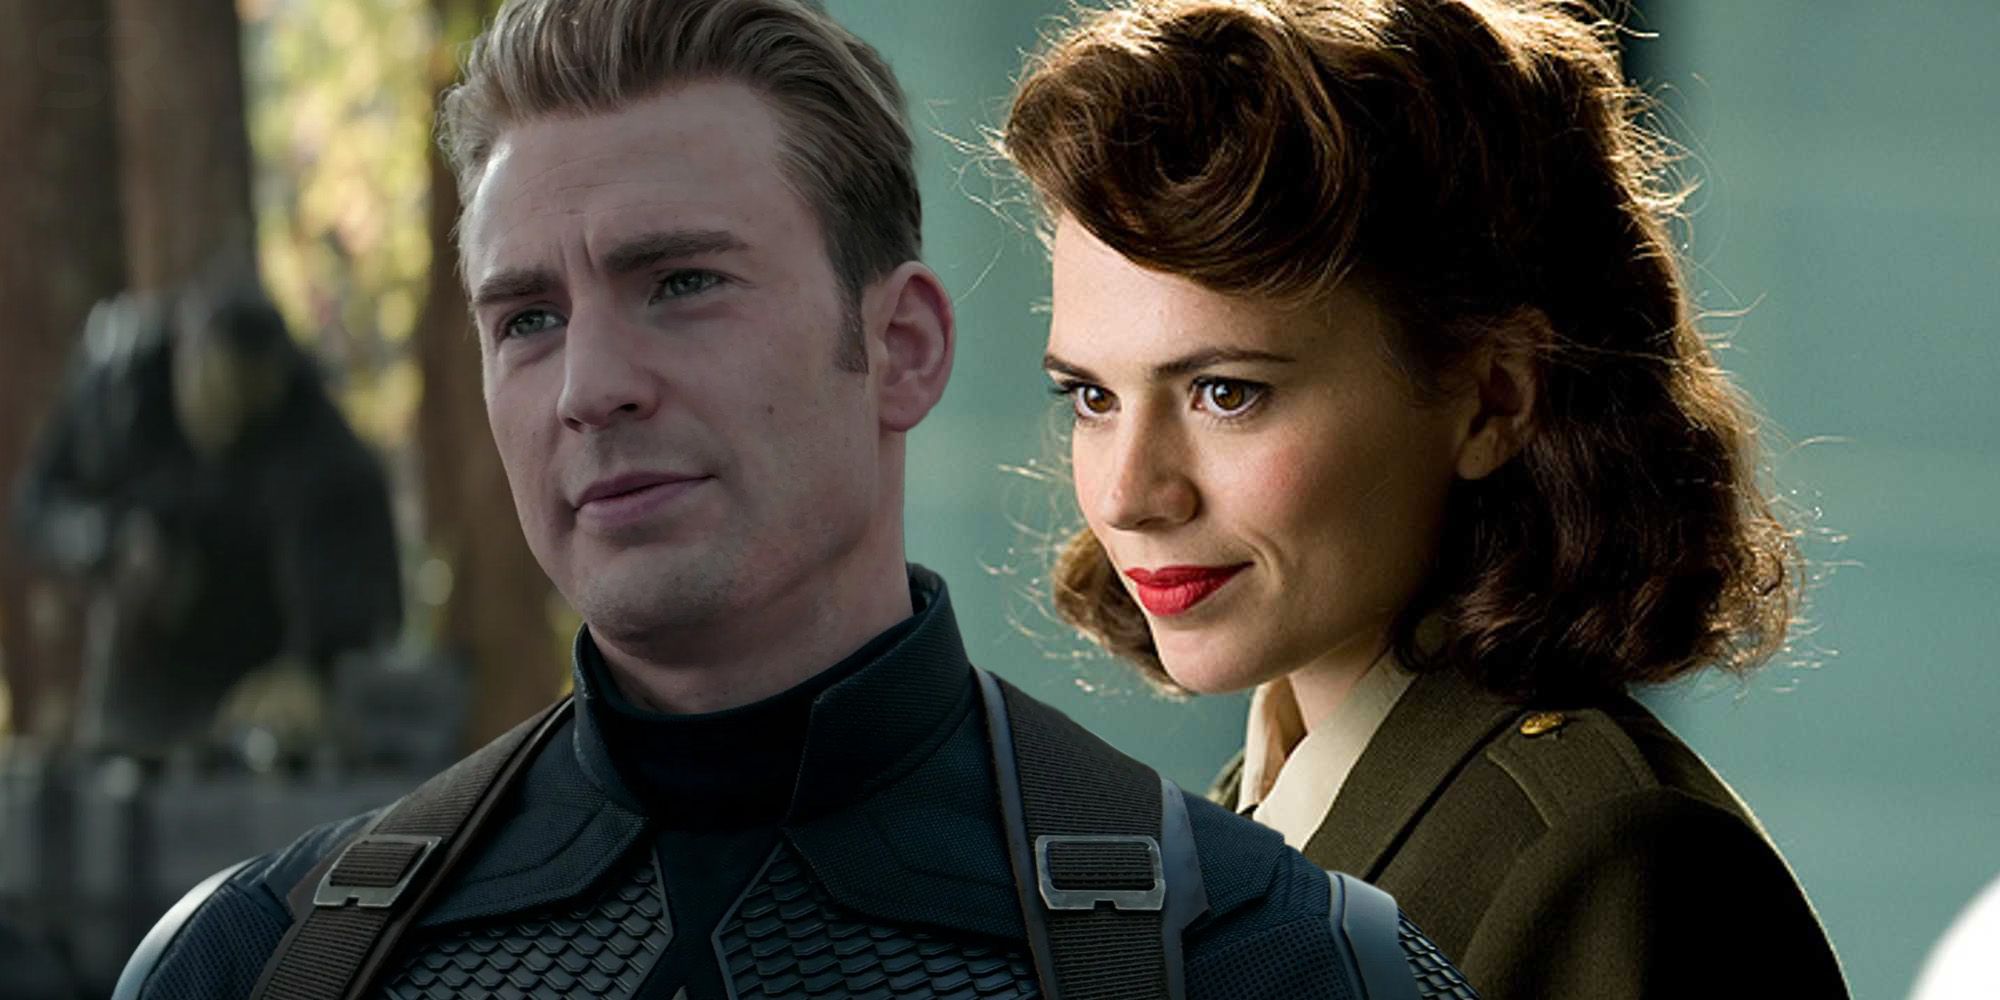 Split image of Chris Evans as Captain America from Avengers: Endgame and Peggy Carter from The First Avenger.